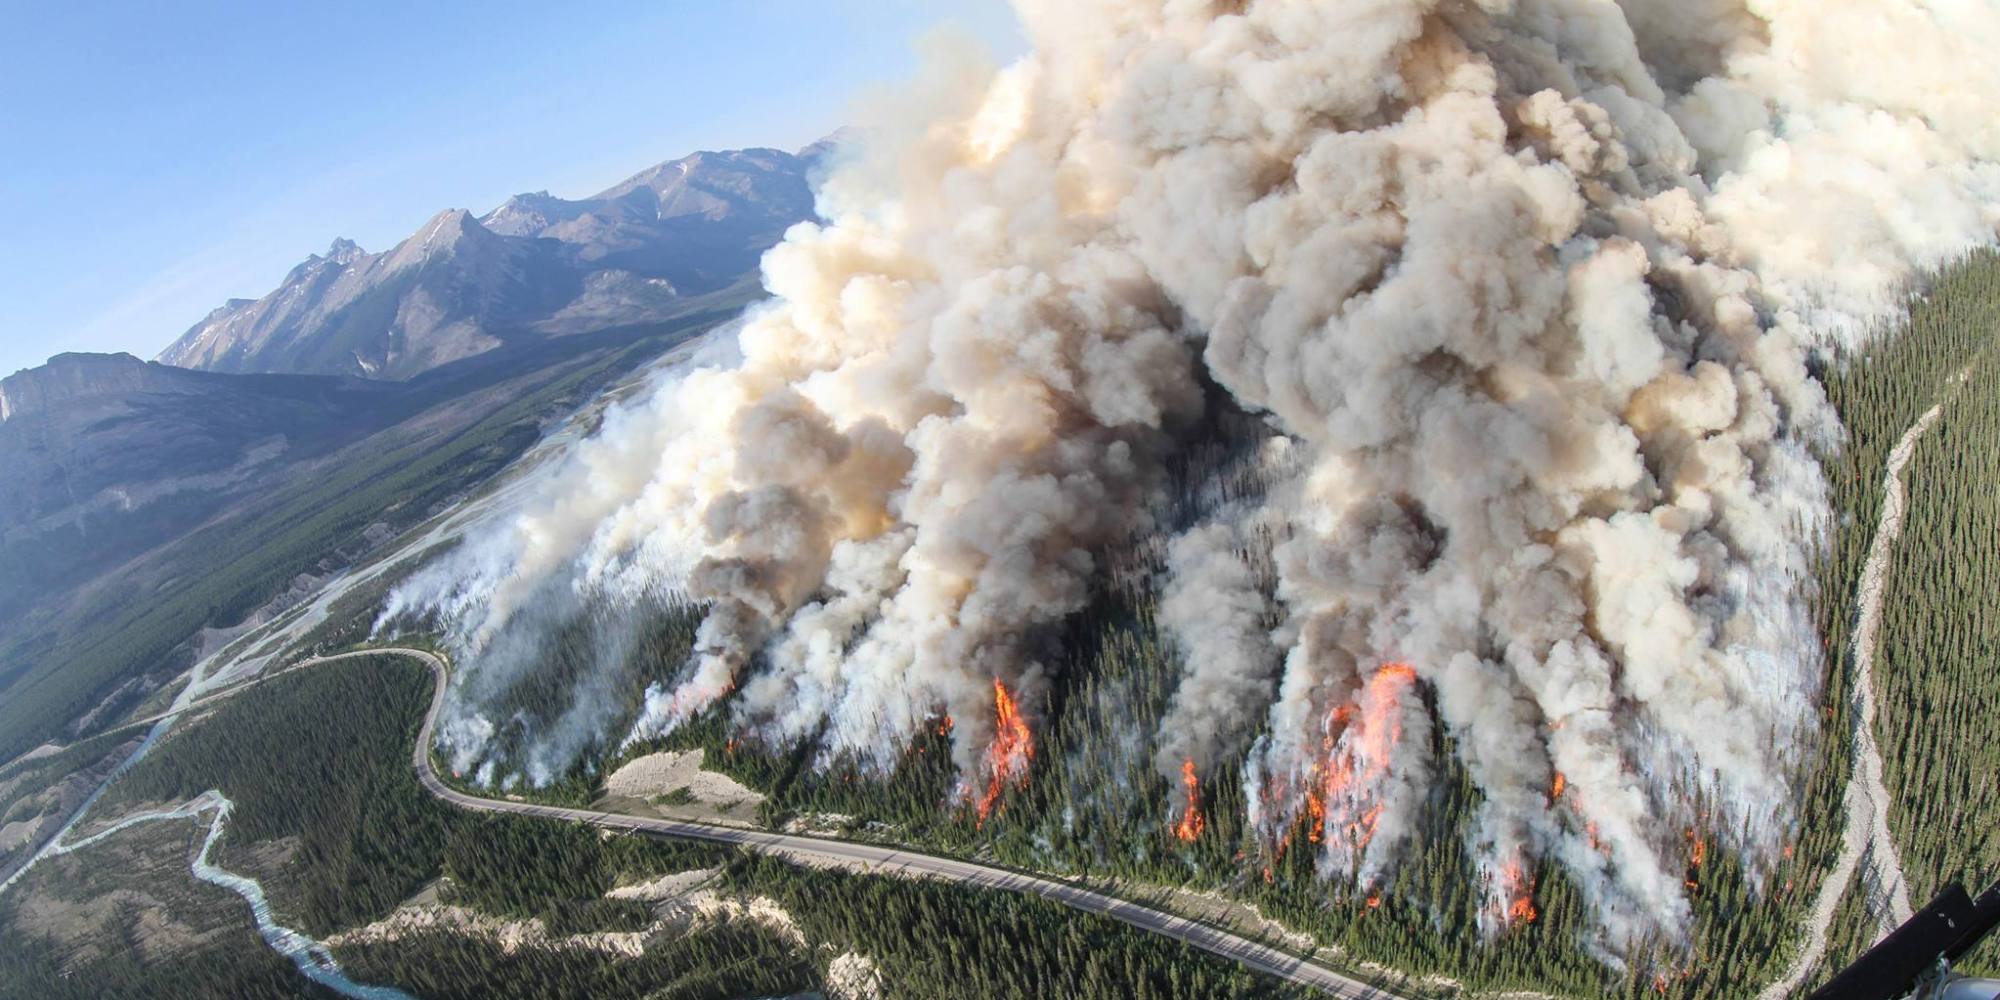 Spreading Creek Wildfire Rips Through Banff National Park (PHOTOS, VIDEO)